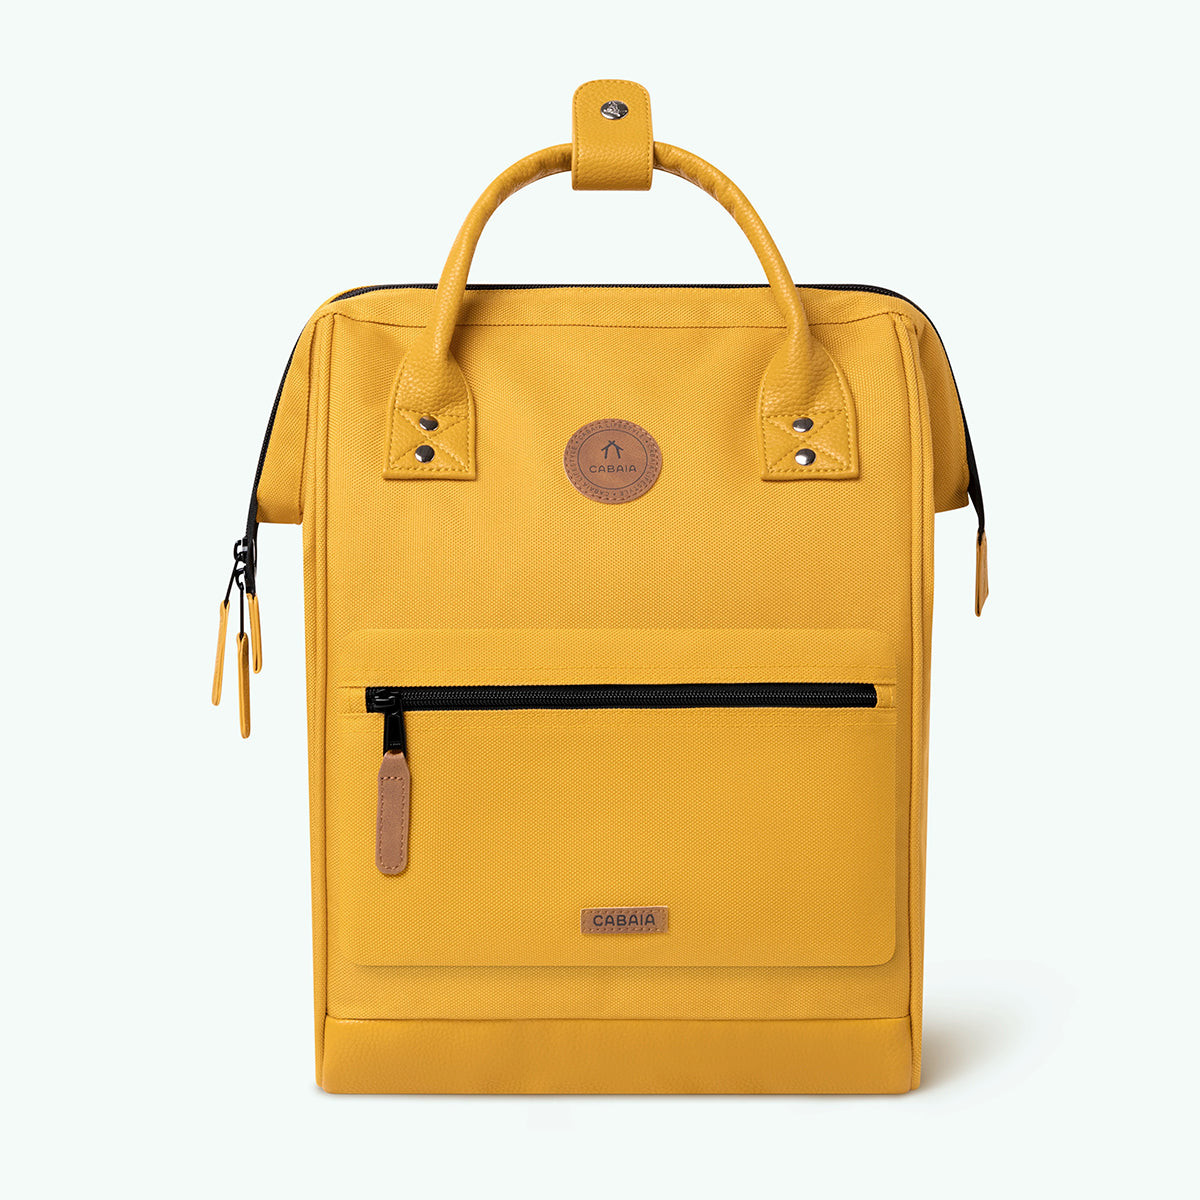 adventurer-yellow-medium-backpack-1-pocket